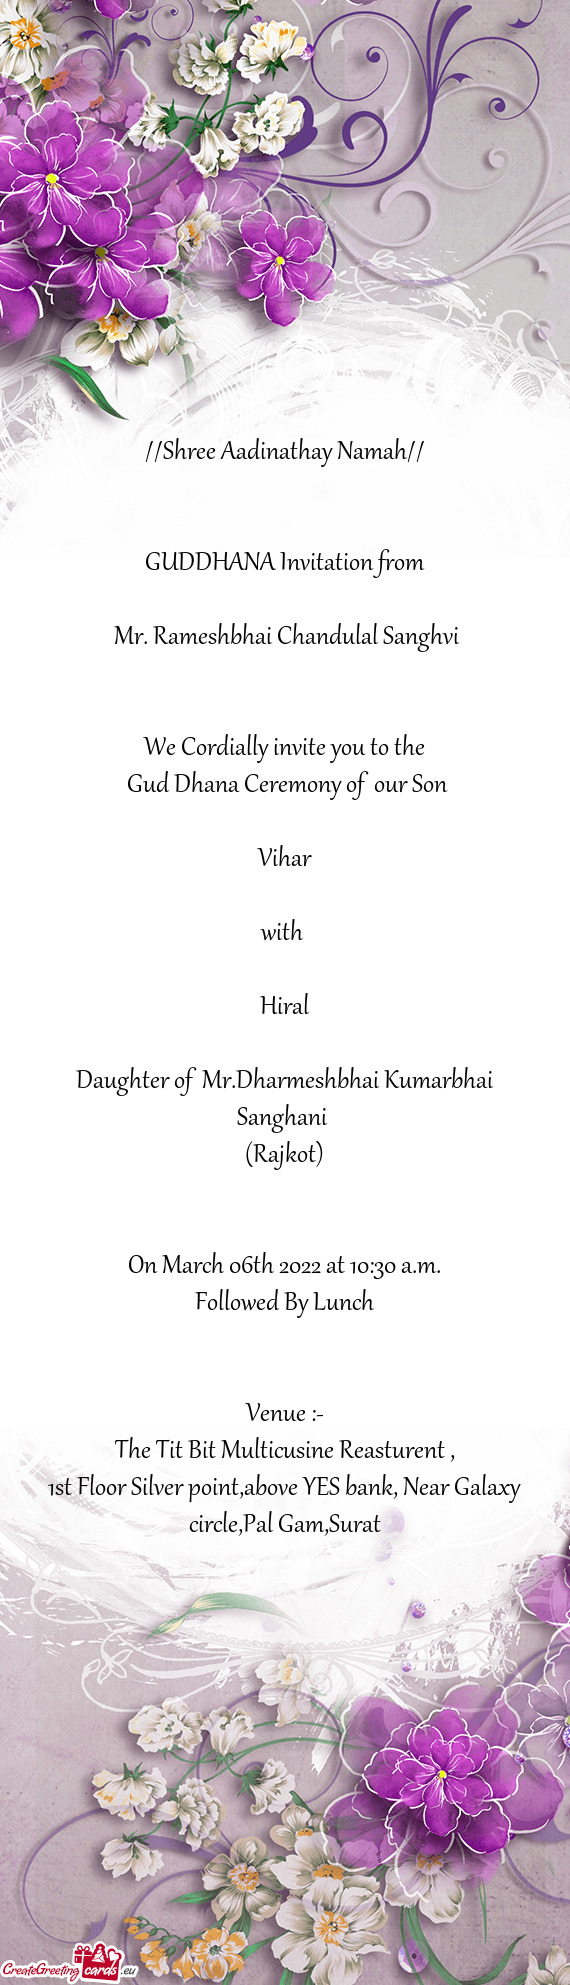 GUDDHANA Invitation from